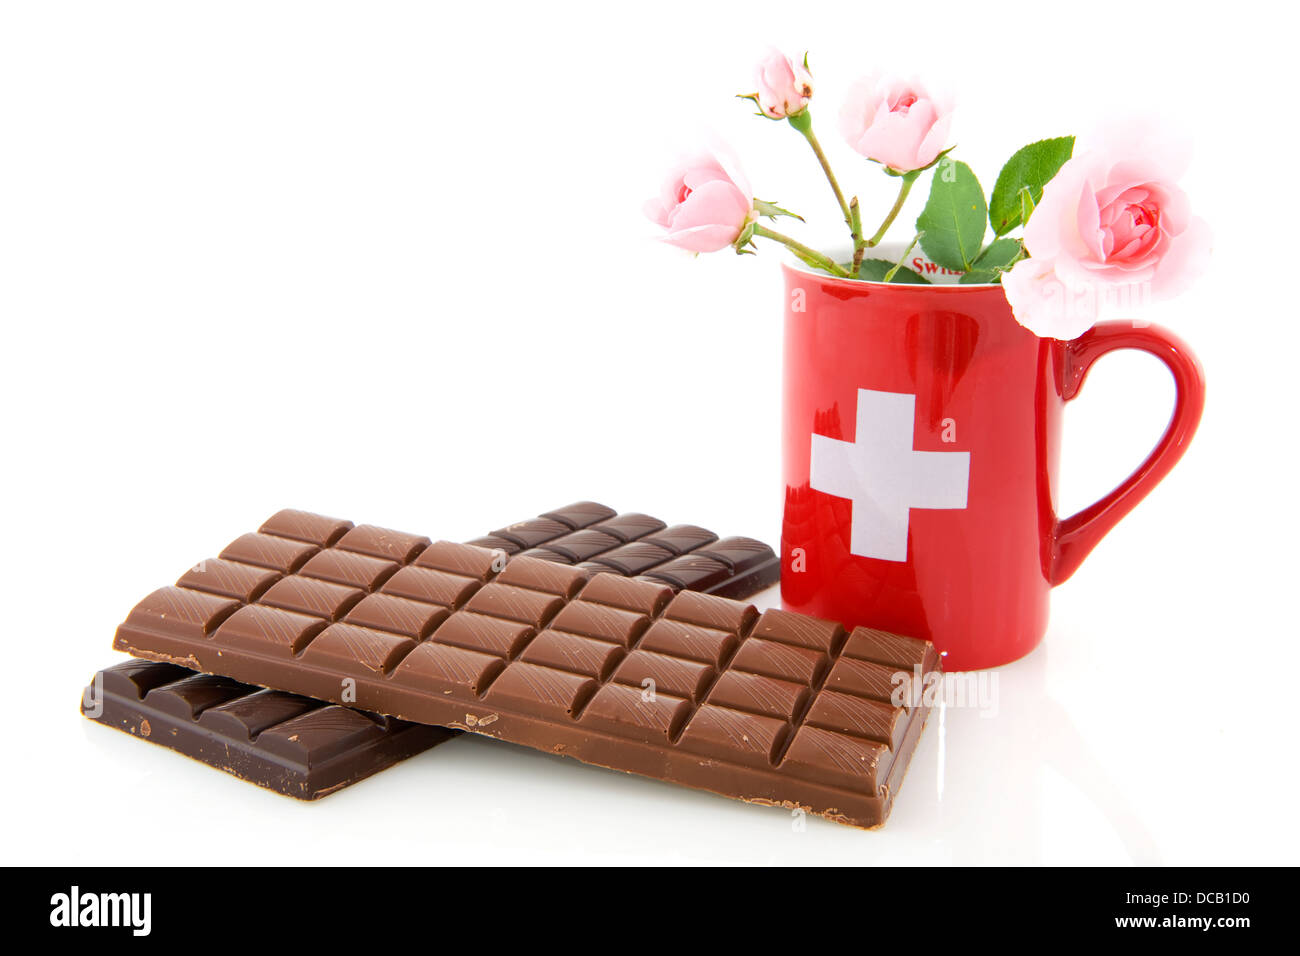 Chocolate from Switzerland Stock Photo - Alamy